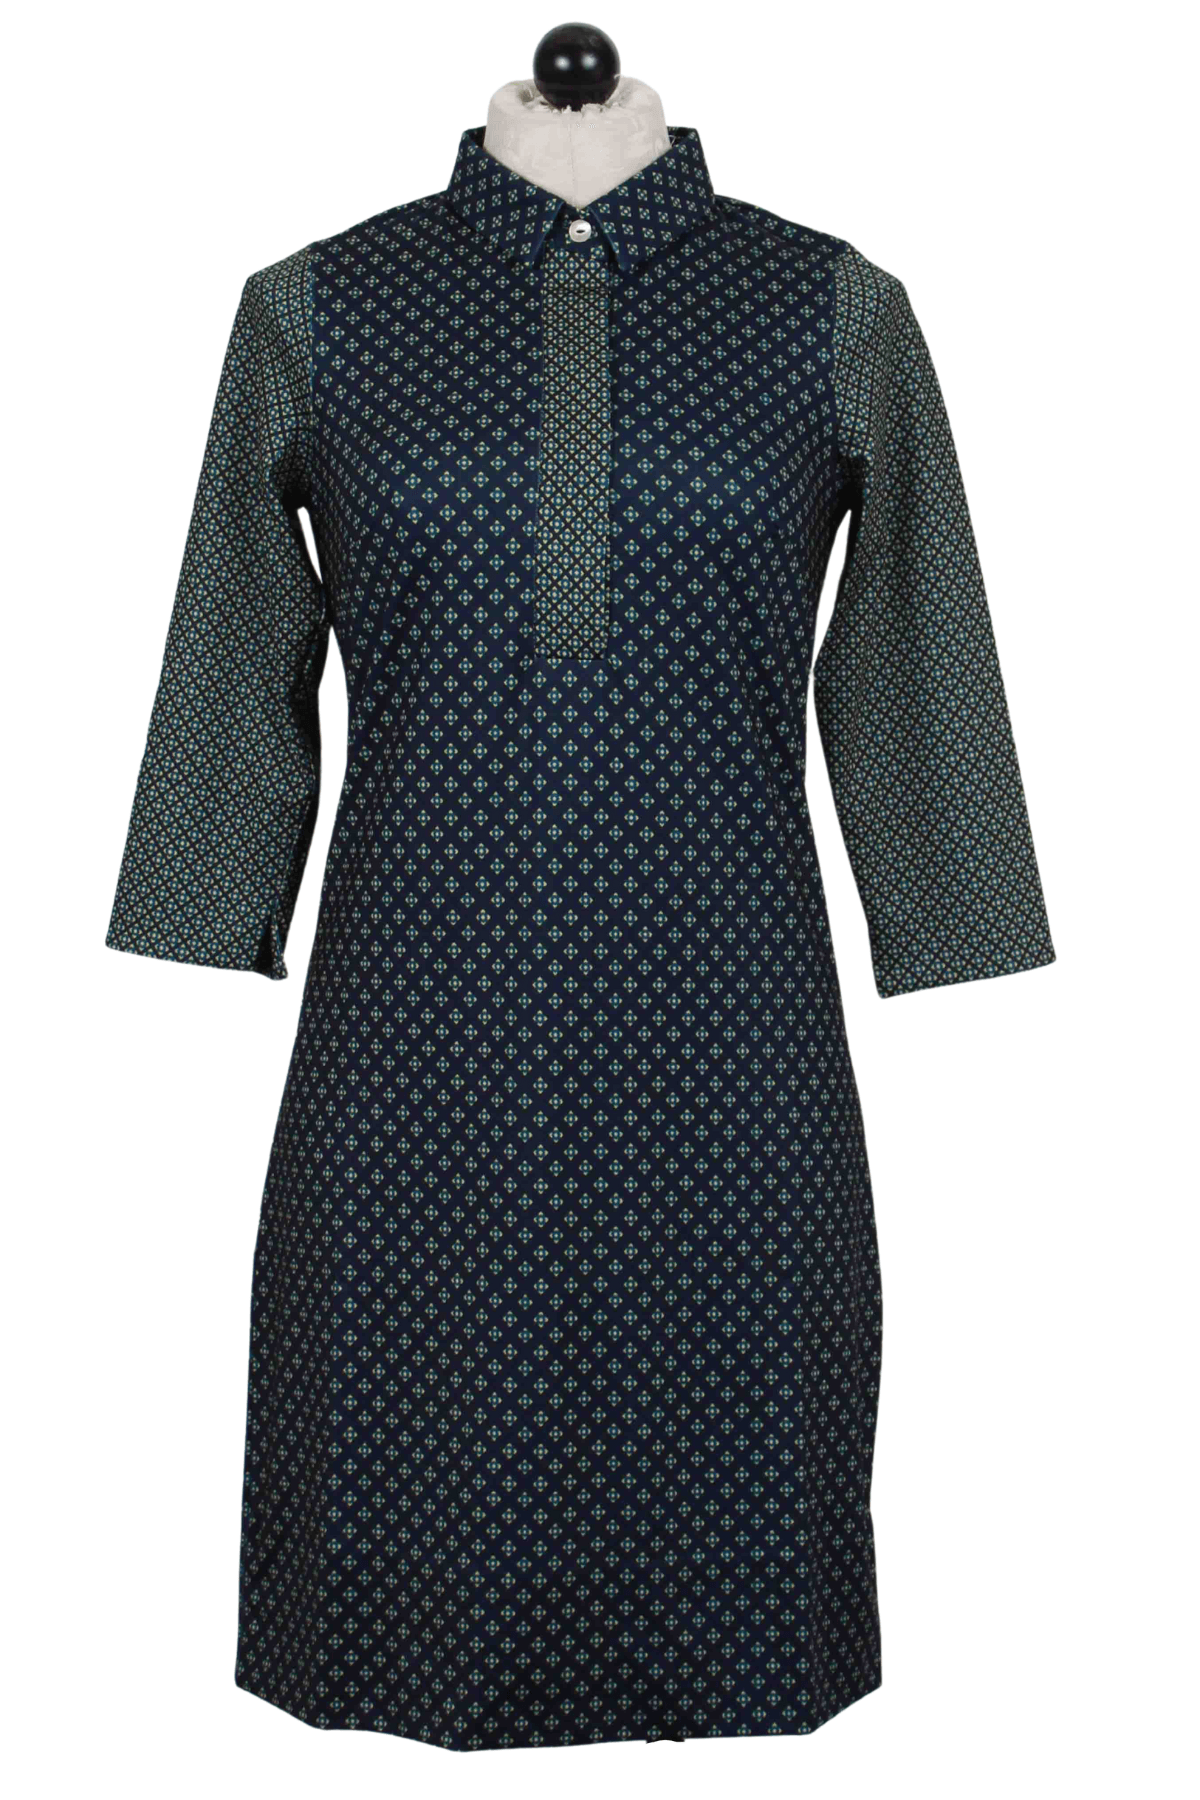 navy Diamond Dot 3/4 Sleeve Everyday Dress by Gretchen Scott